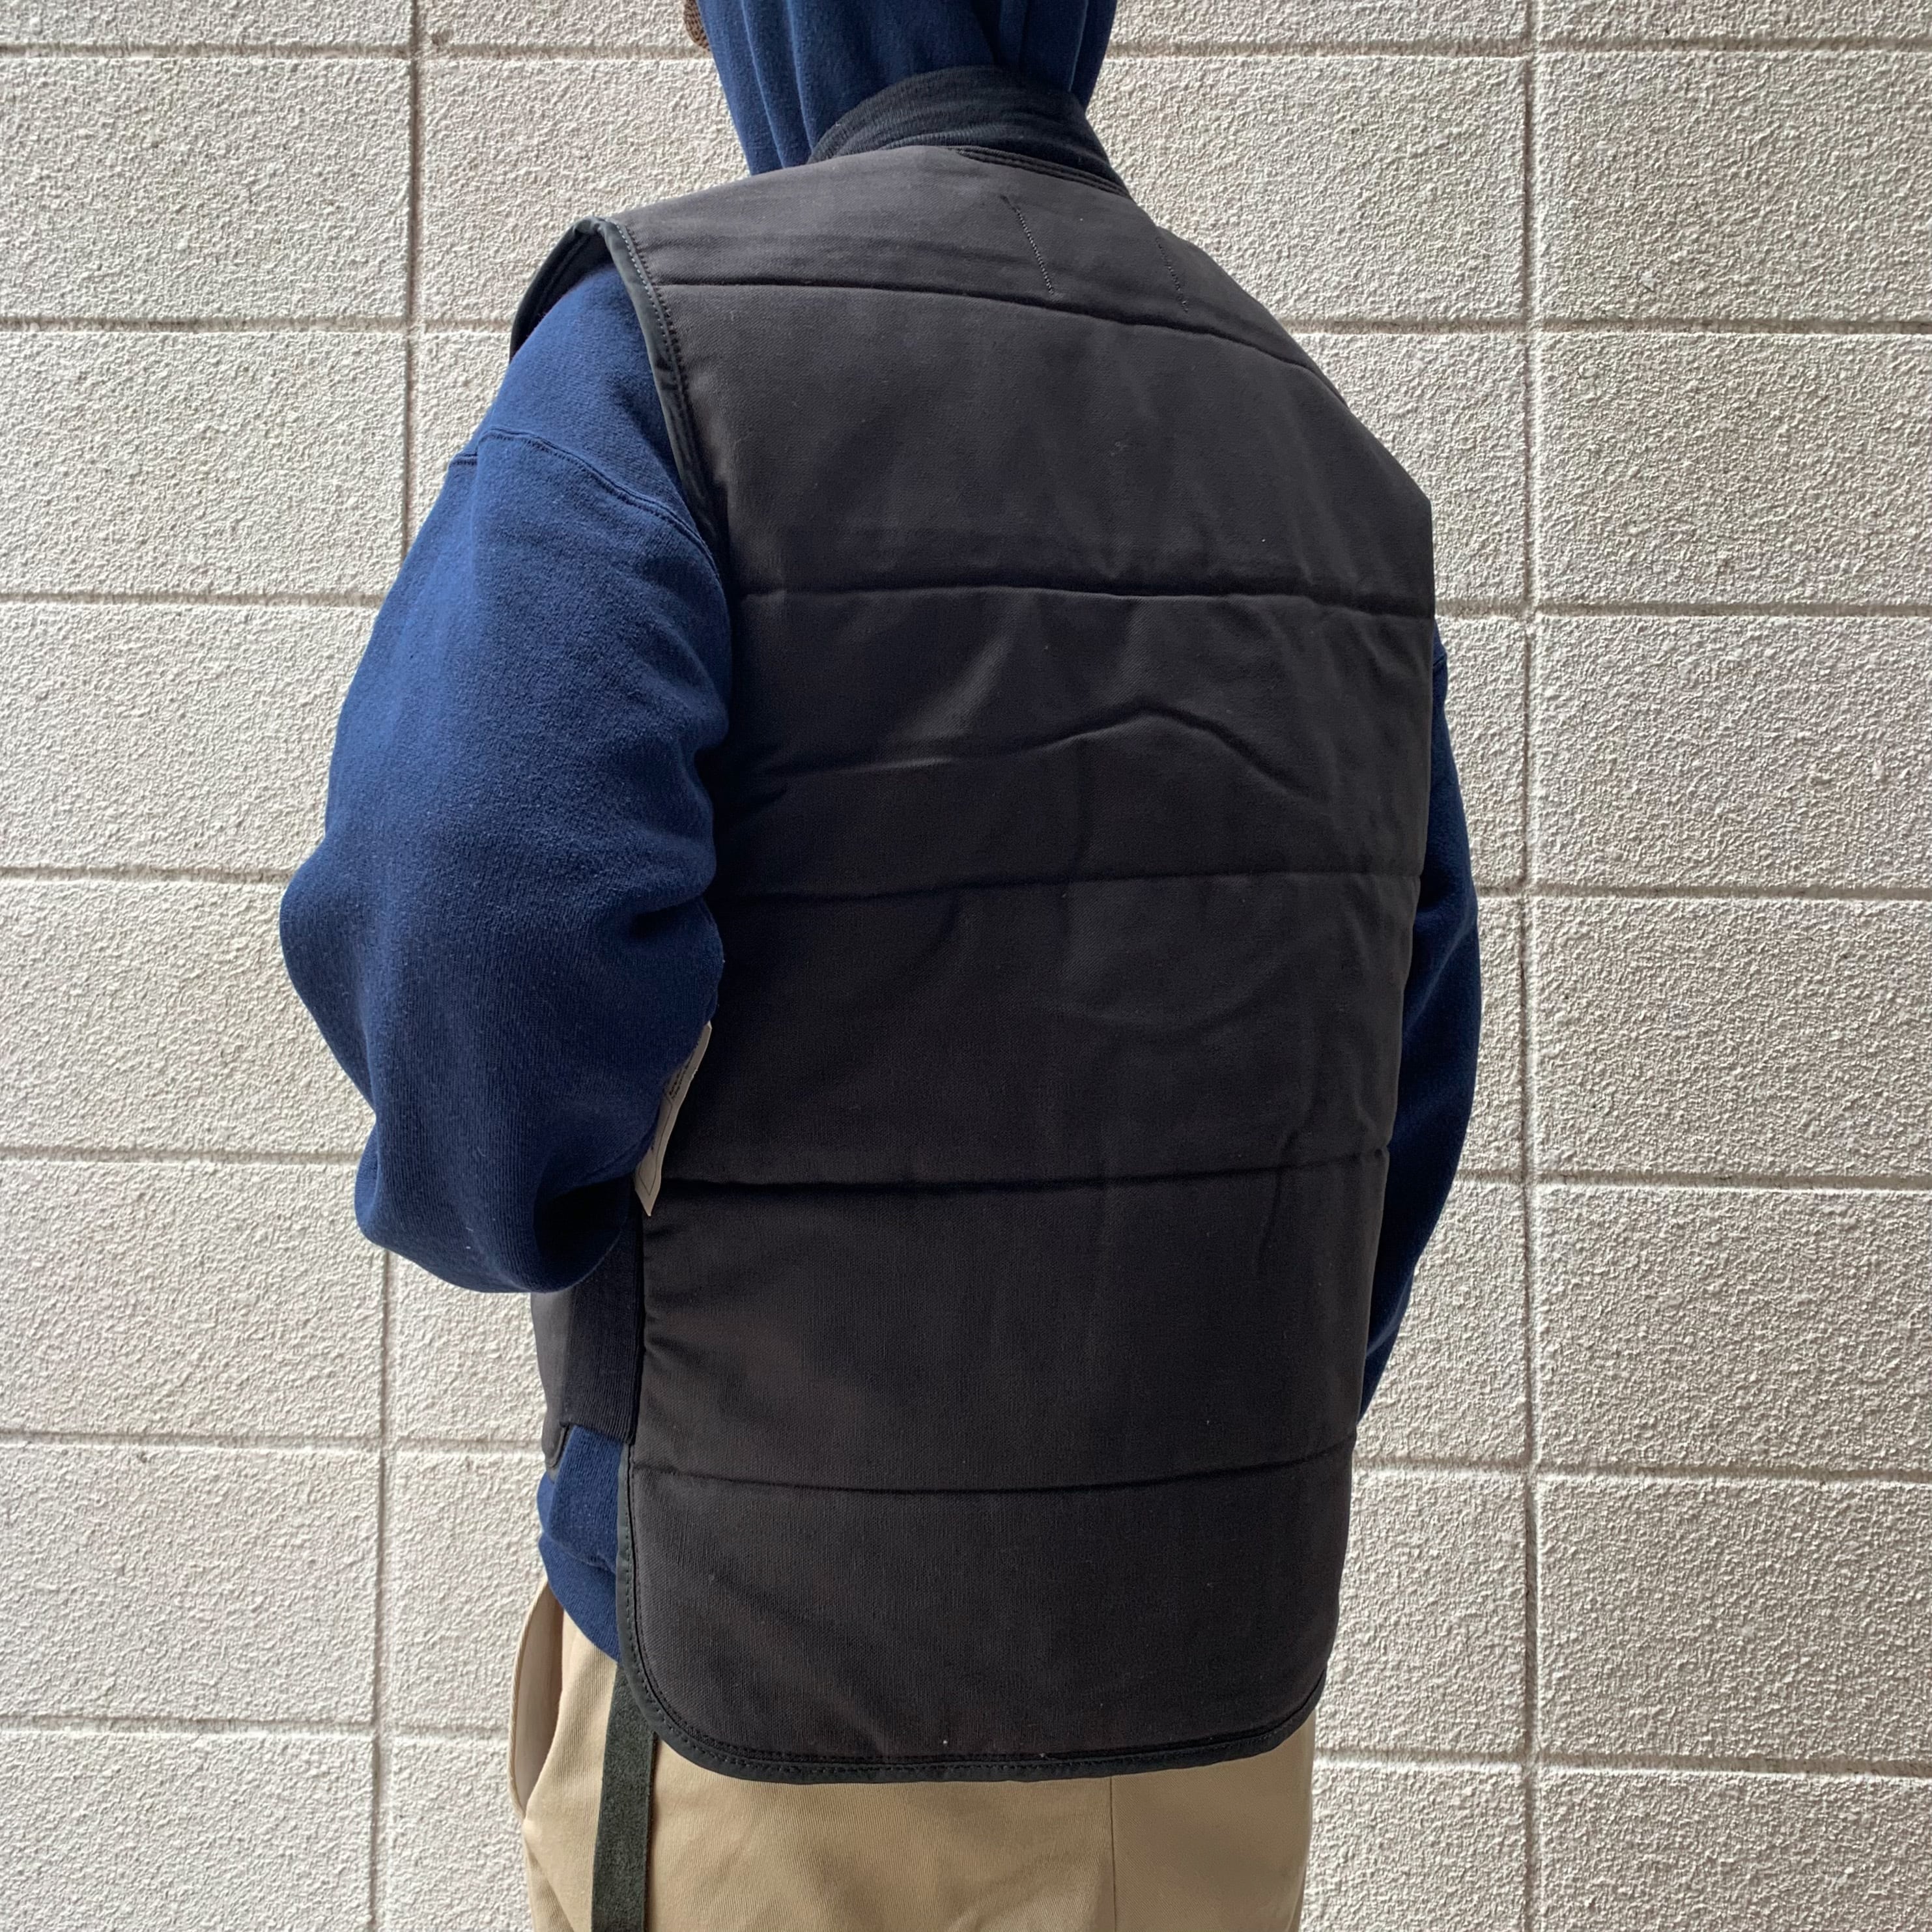 RefrigiWear Insulated Iron-Tuff vest